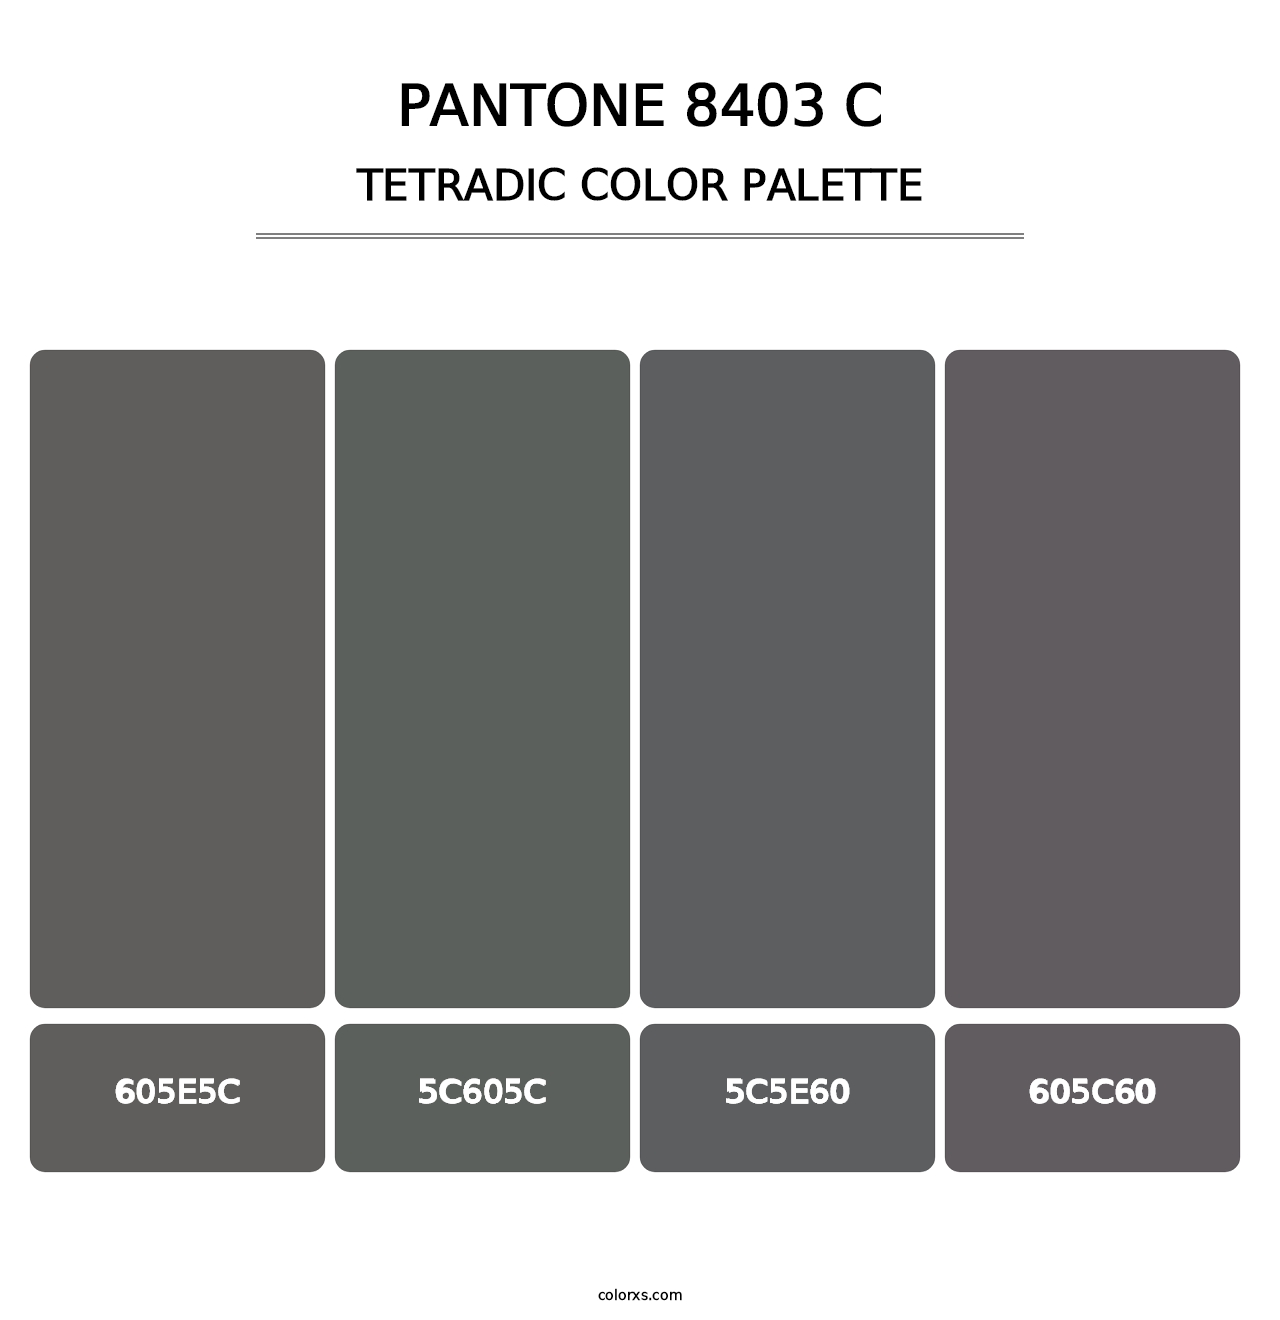 PANTONE 8403 C - Tetradic Color Palette